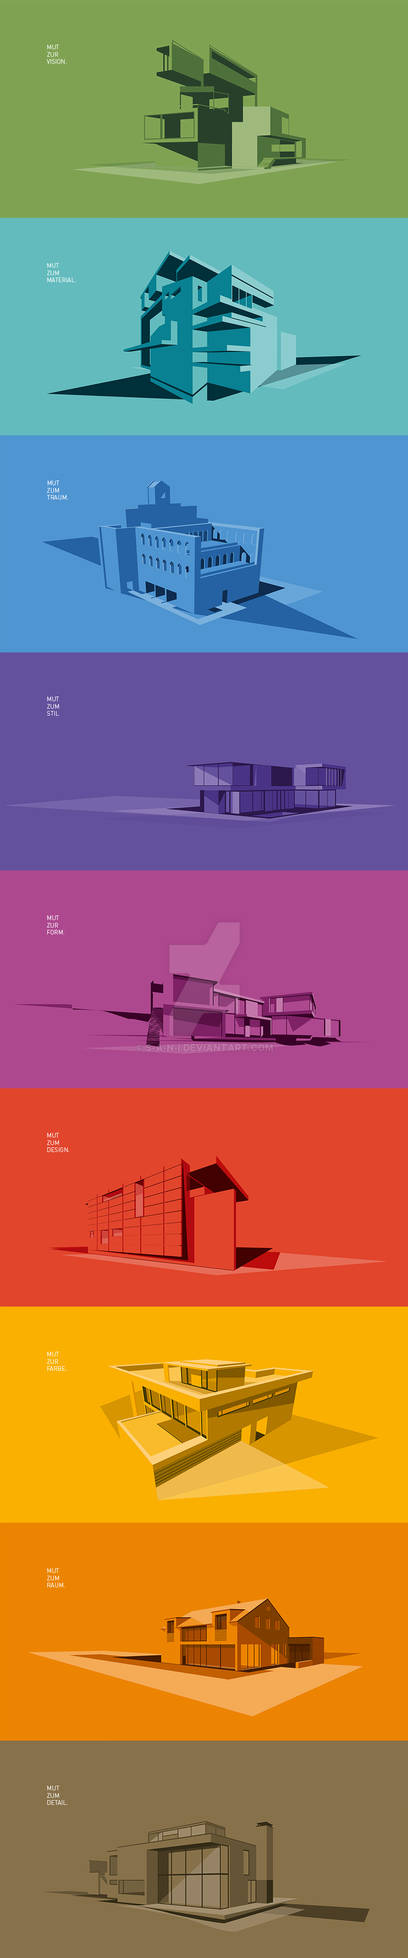 Architecture concept art 1/10